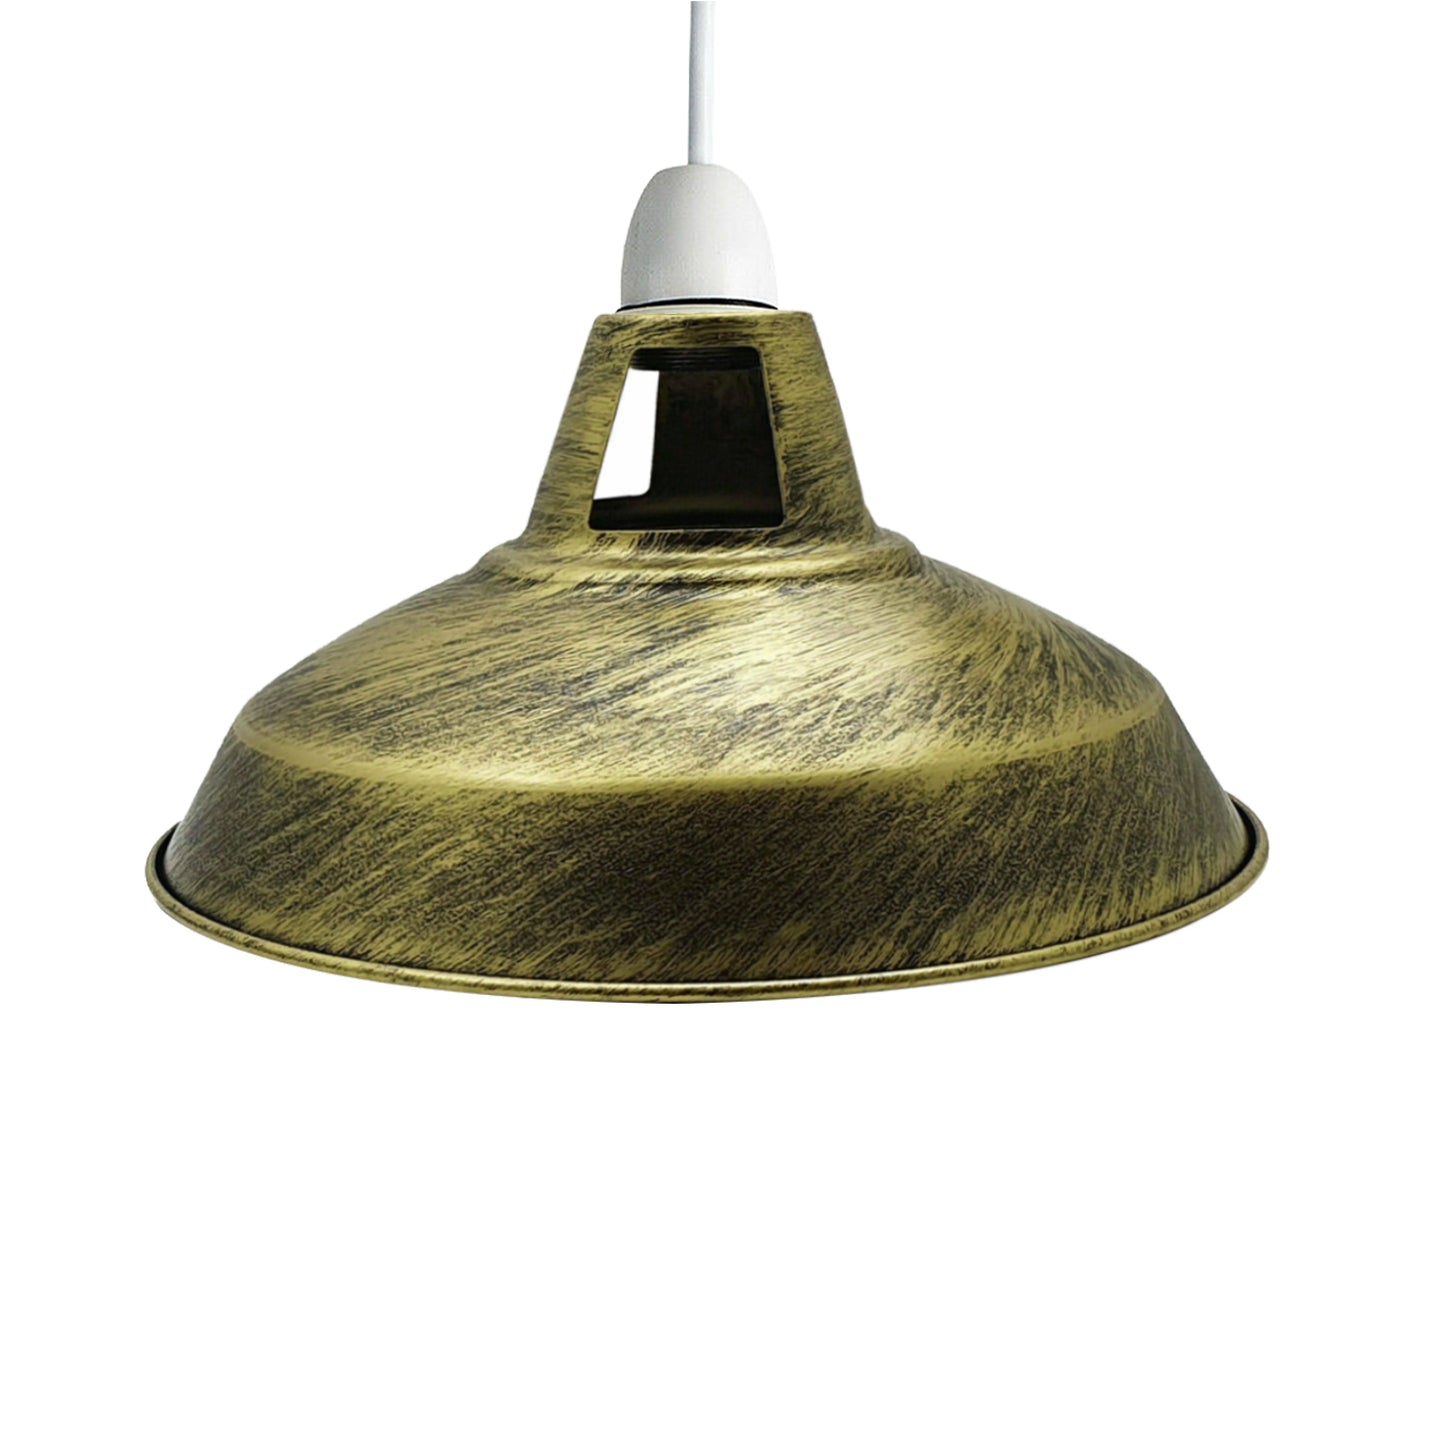 Barn Slotted Metallic lampshades